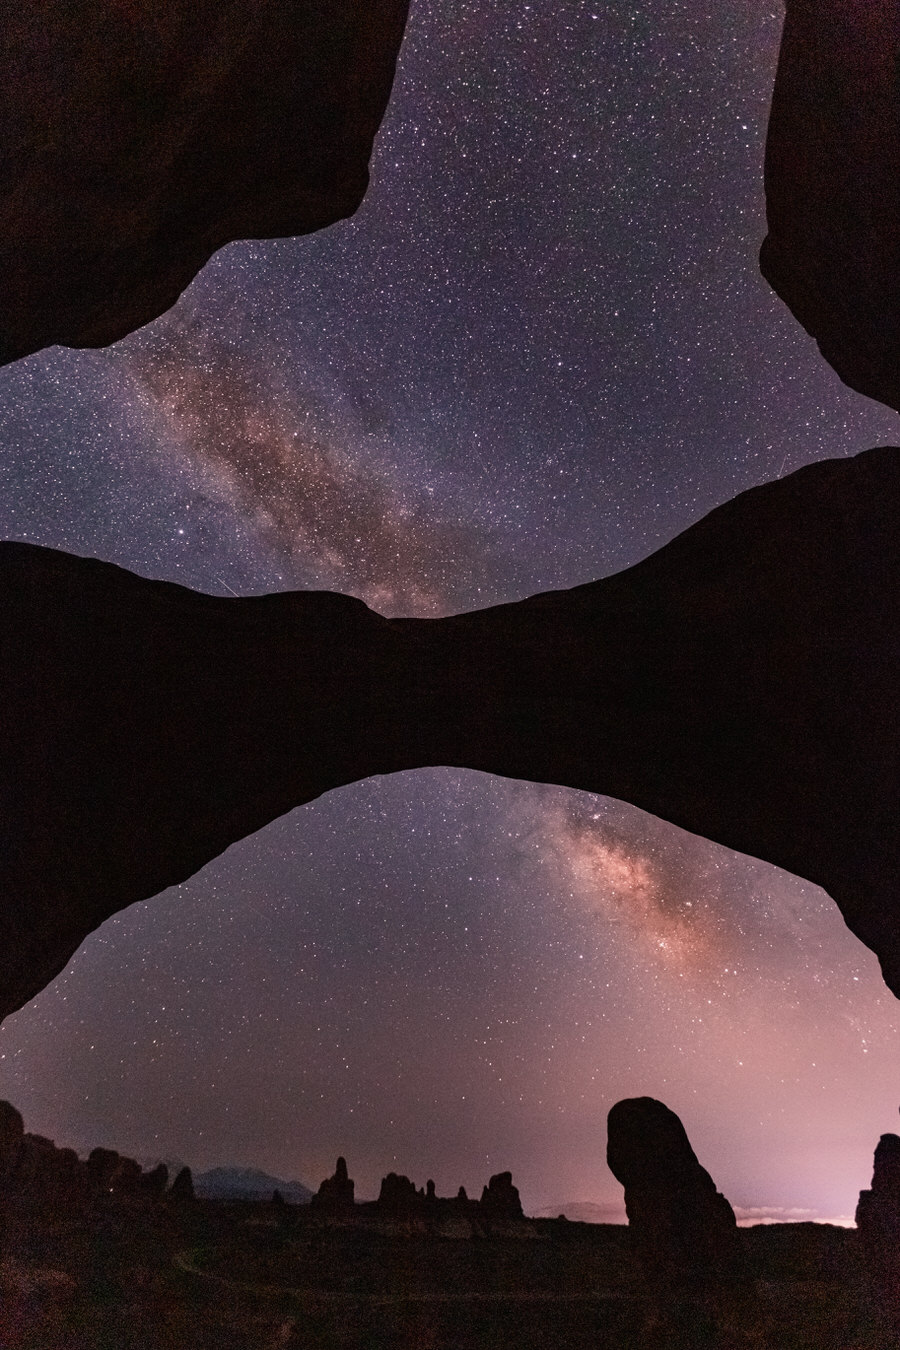 Arches National Park Utah - Milchstraße beim Double Arch